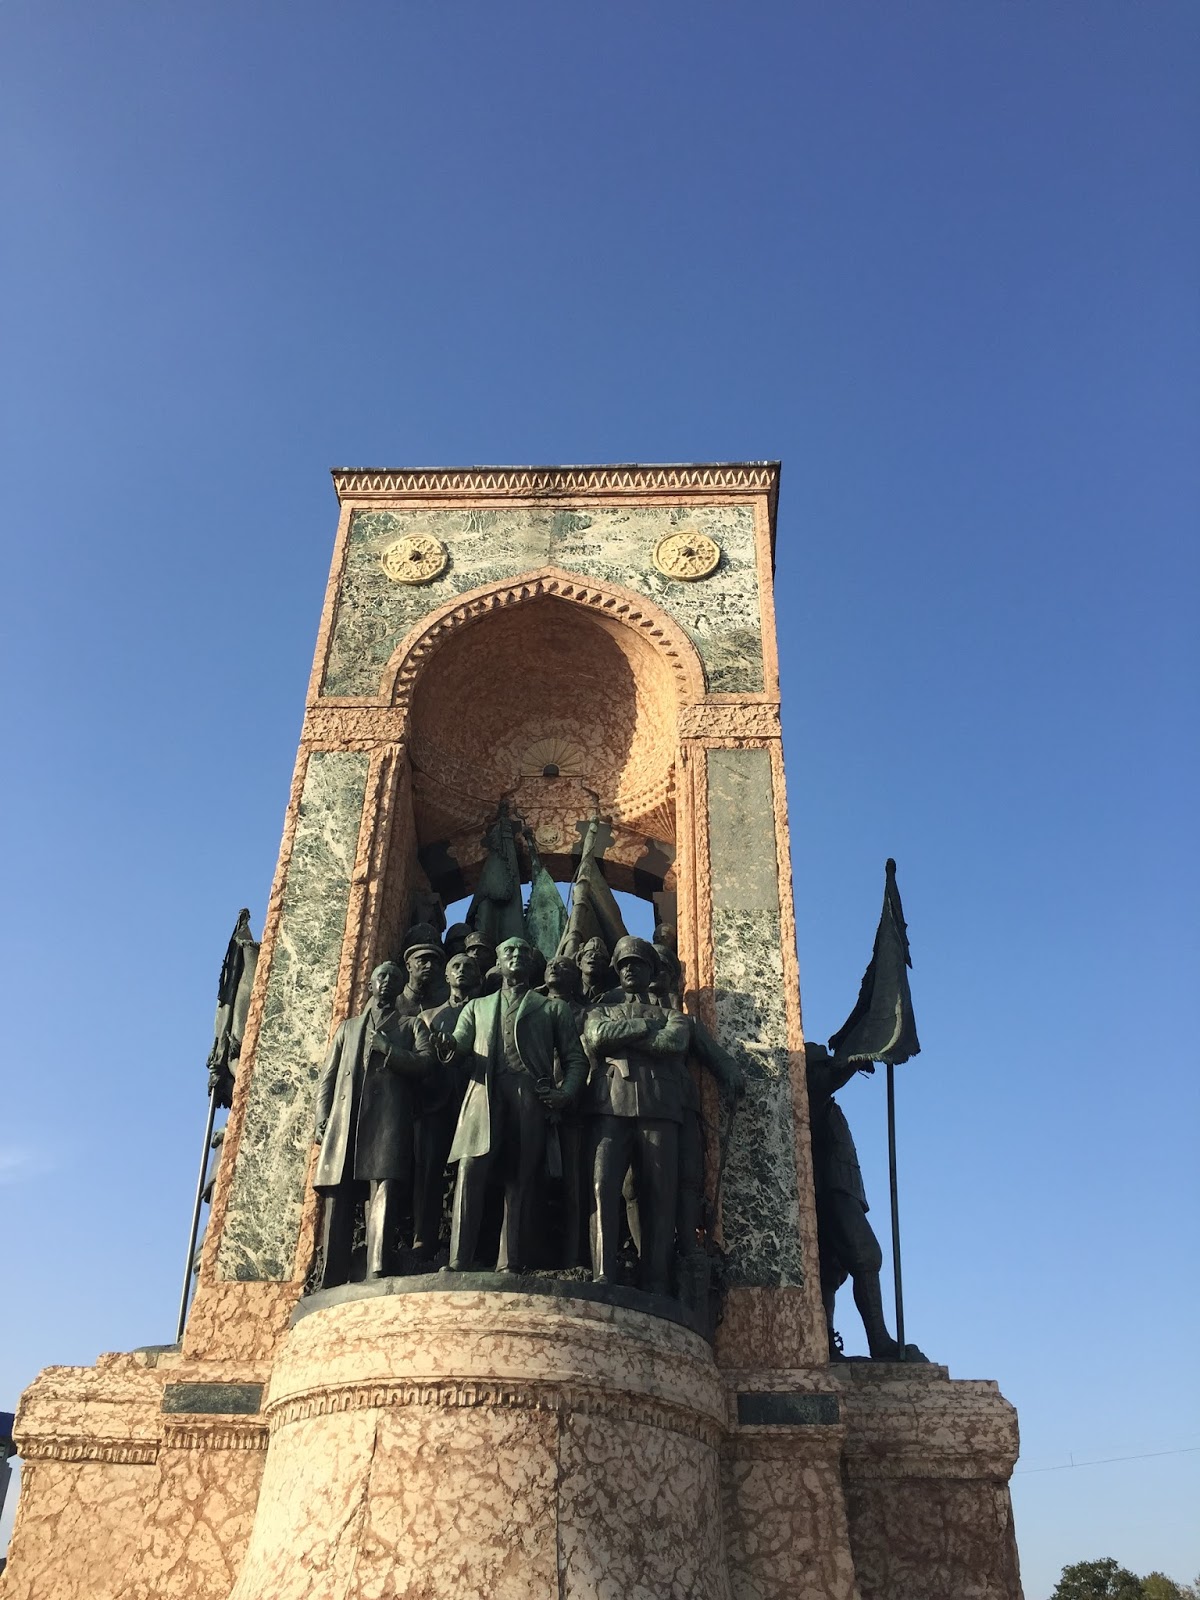 Sculpture in Taksim square